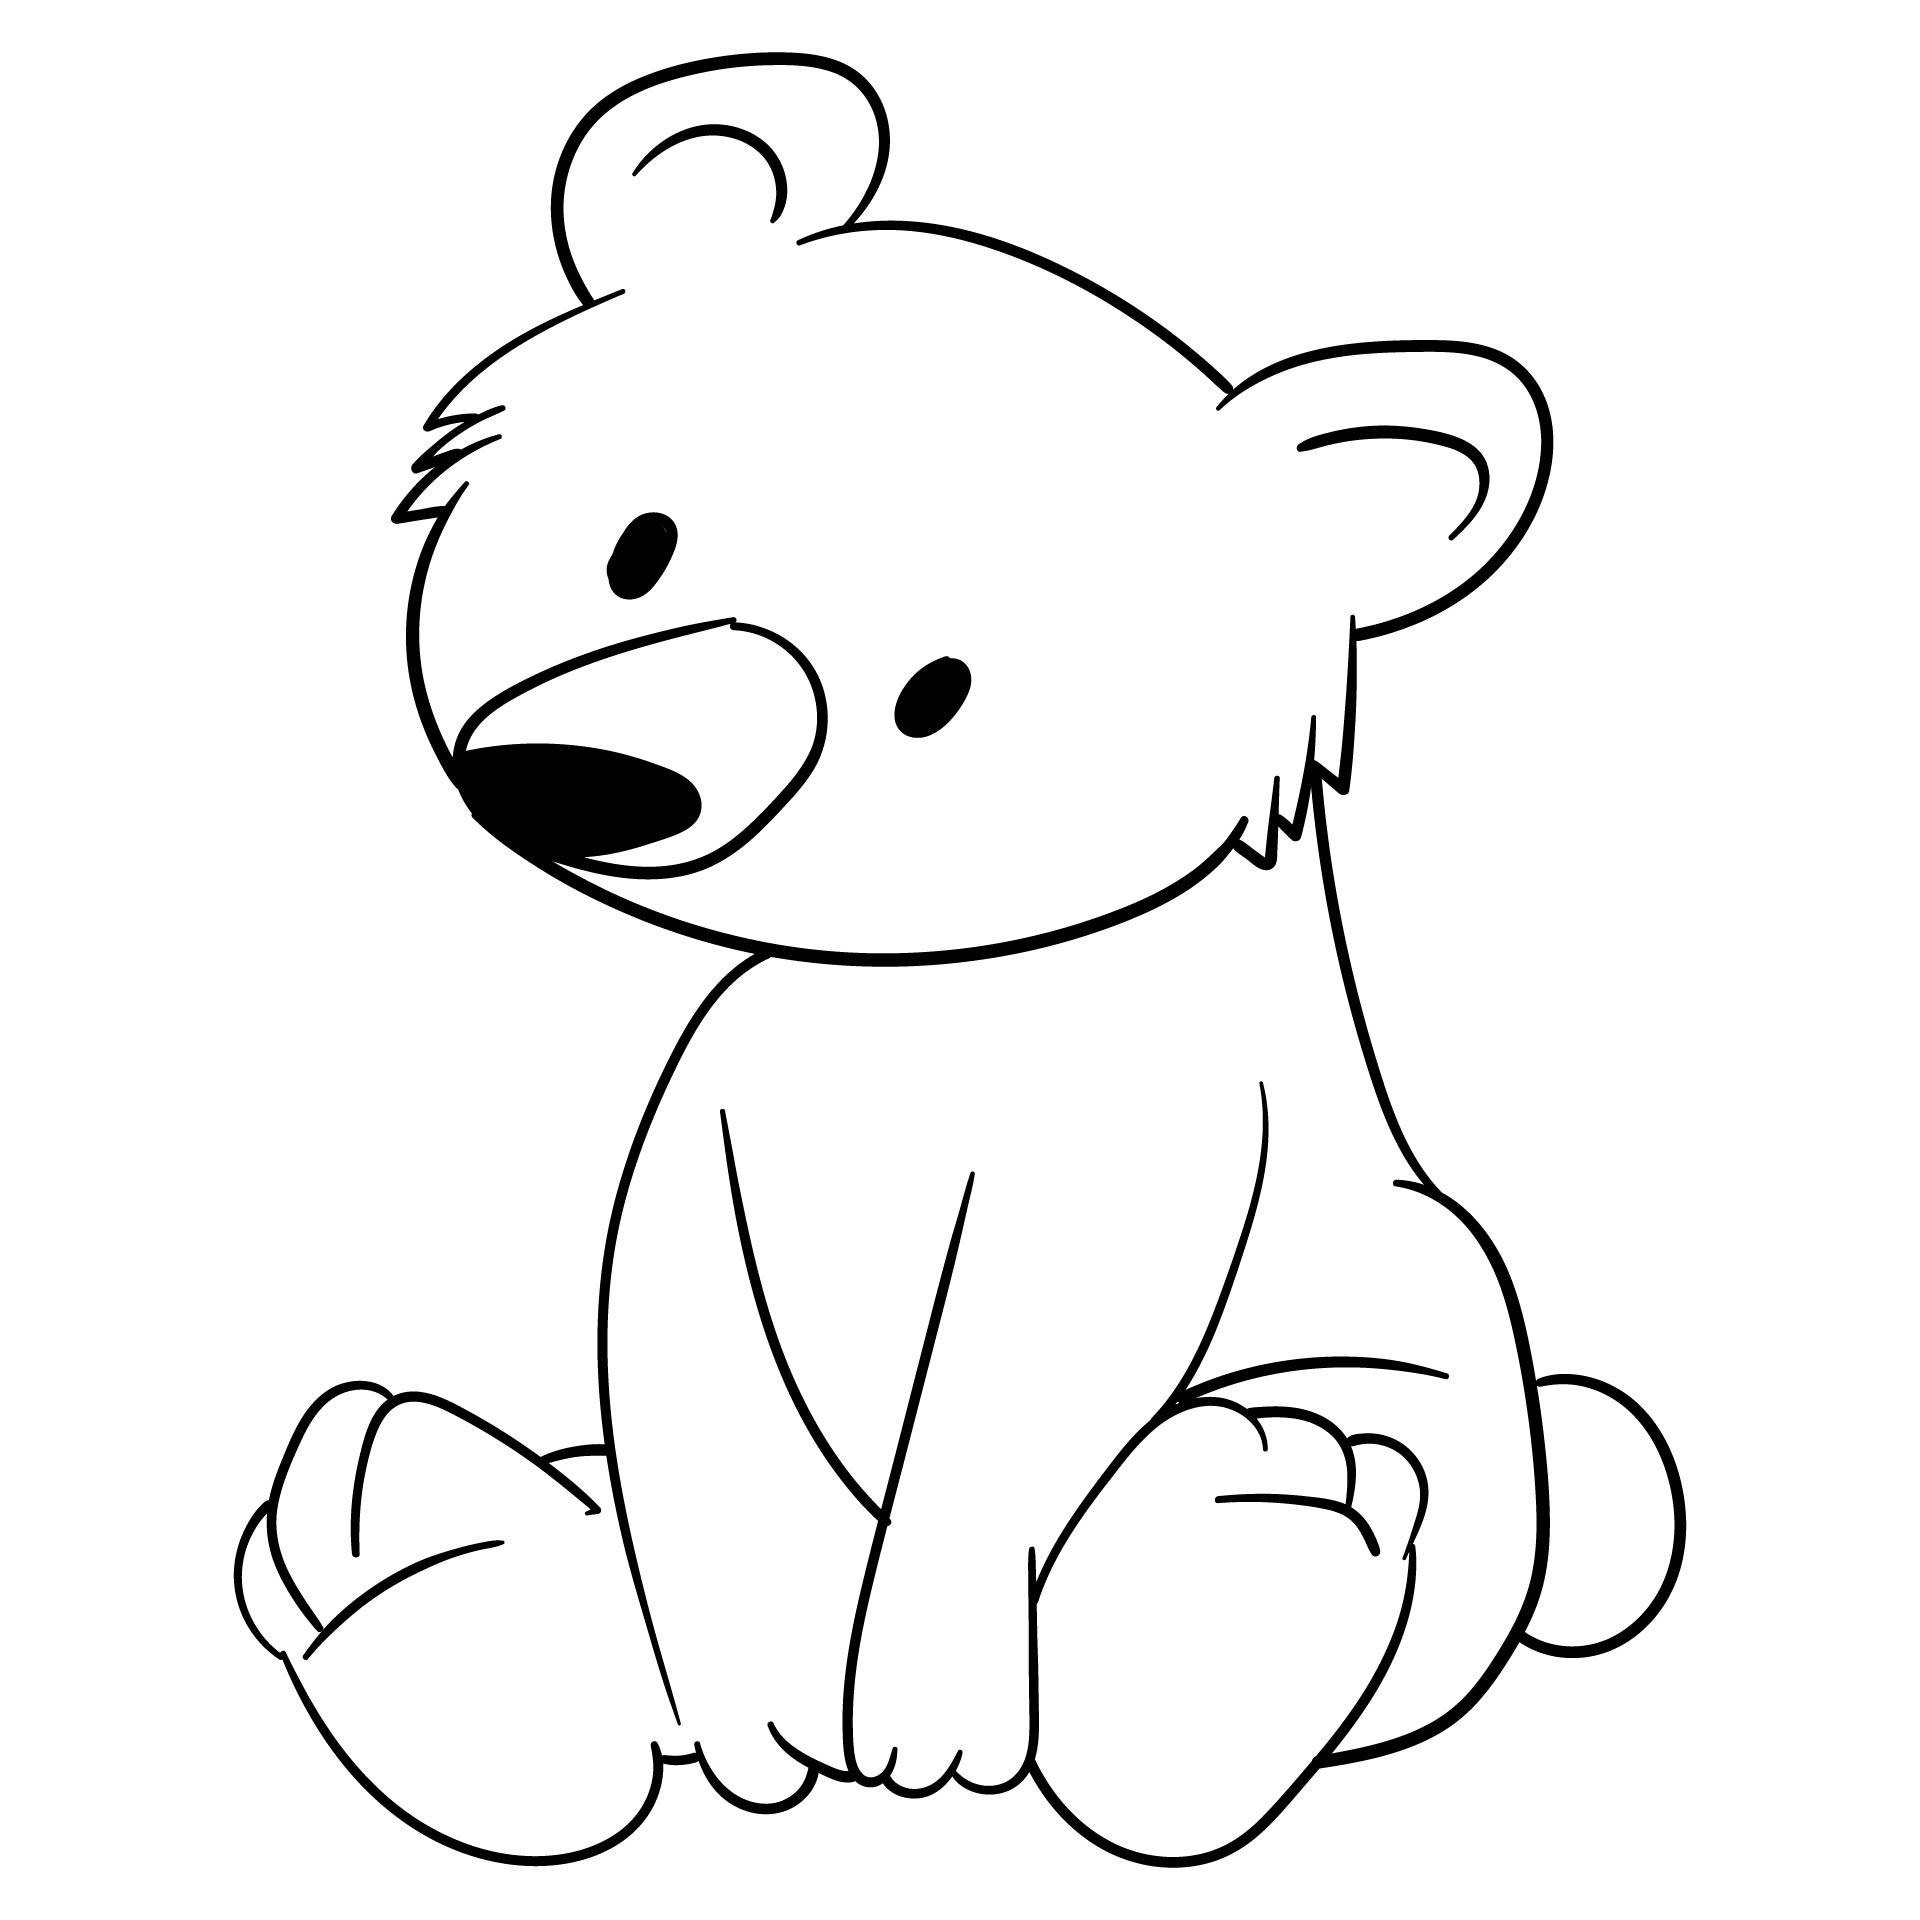 5 Best Images of Teddy Bear Template Printable Teddy Bear Pattern